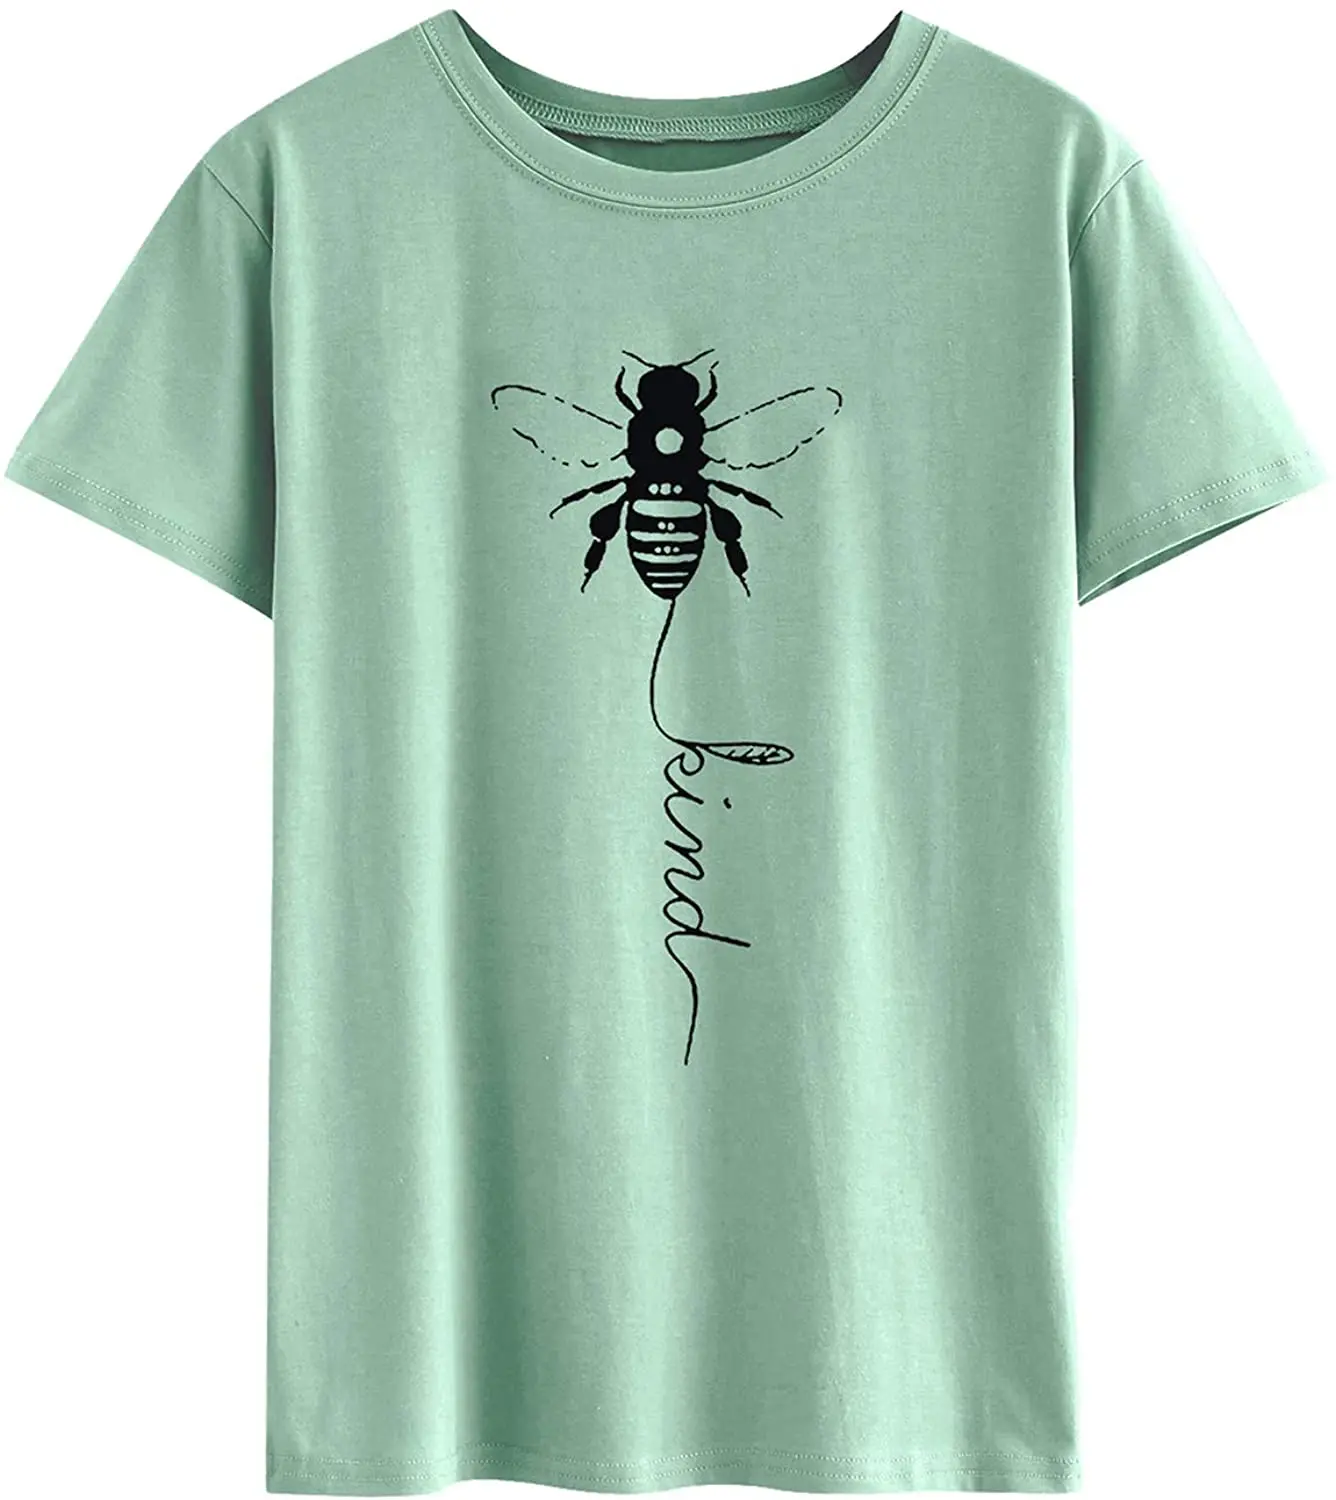 

Unisex Graphic Tees Dresswel Women Bee Kind T-Shirt Ladies Bee Graphic Shirt Crew Neck Short Sleeve Summer Tee Tops - White, S